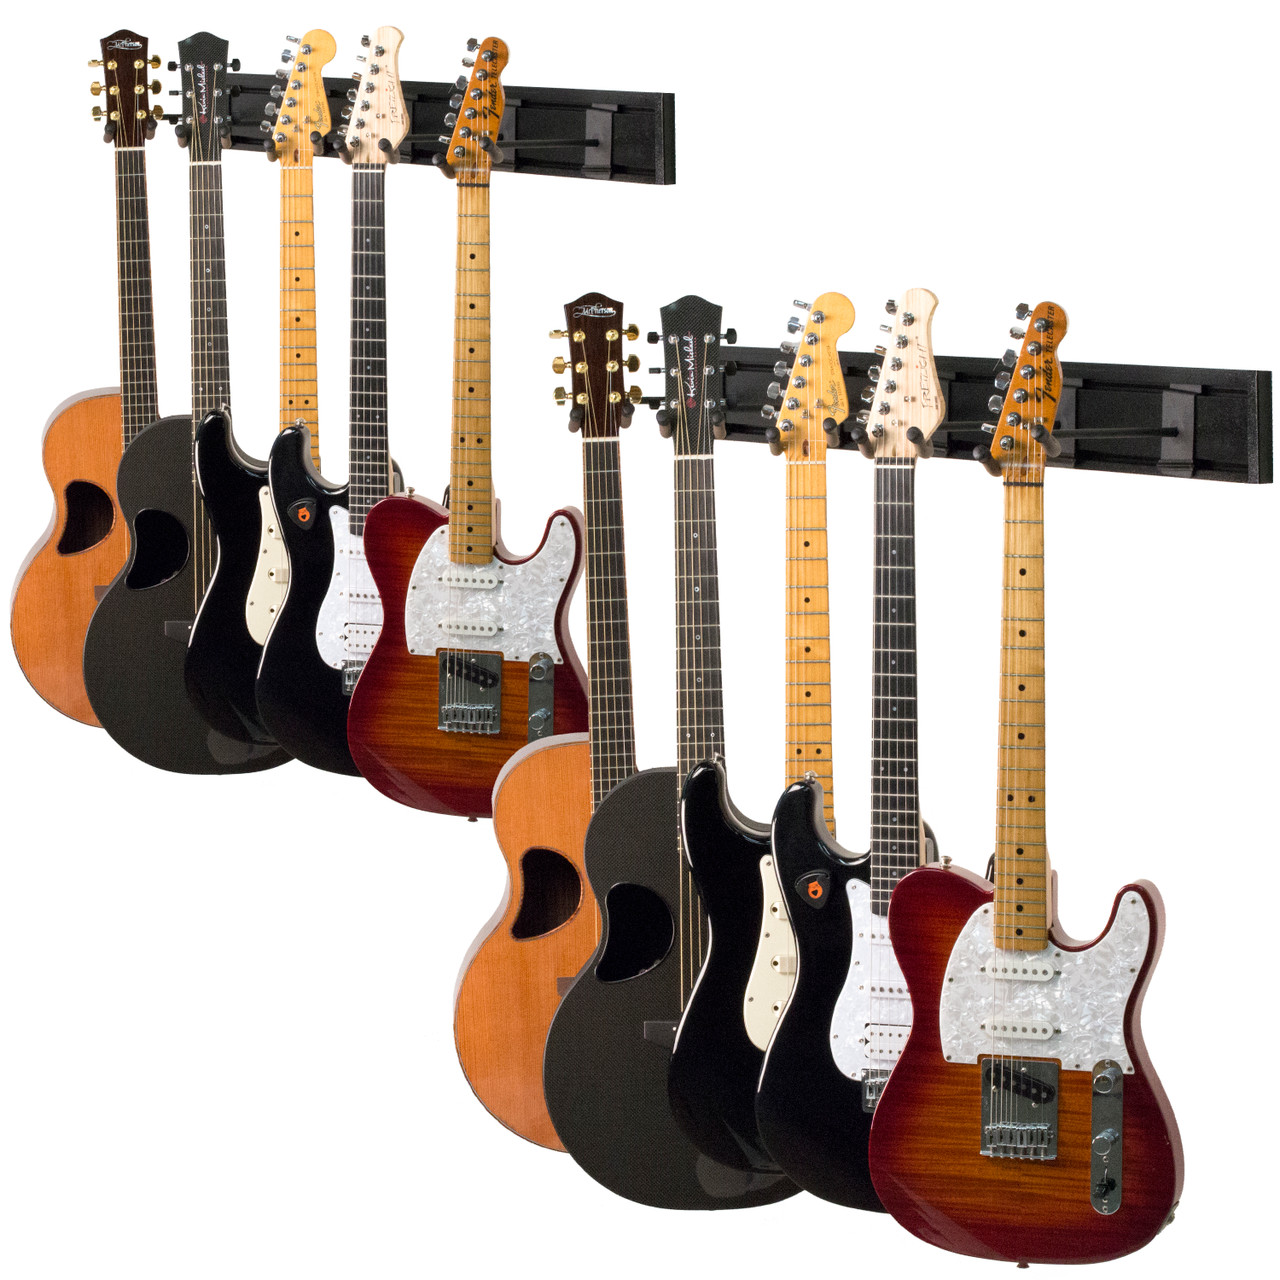 Wall Mount Guitar Hangers | CC11K